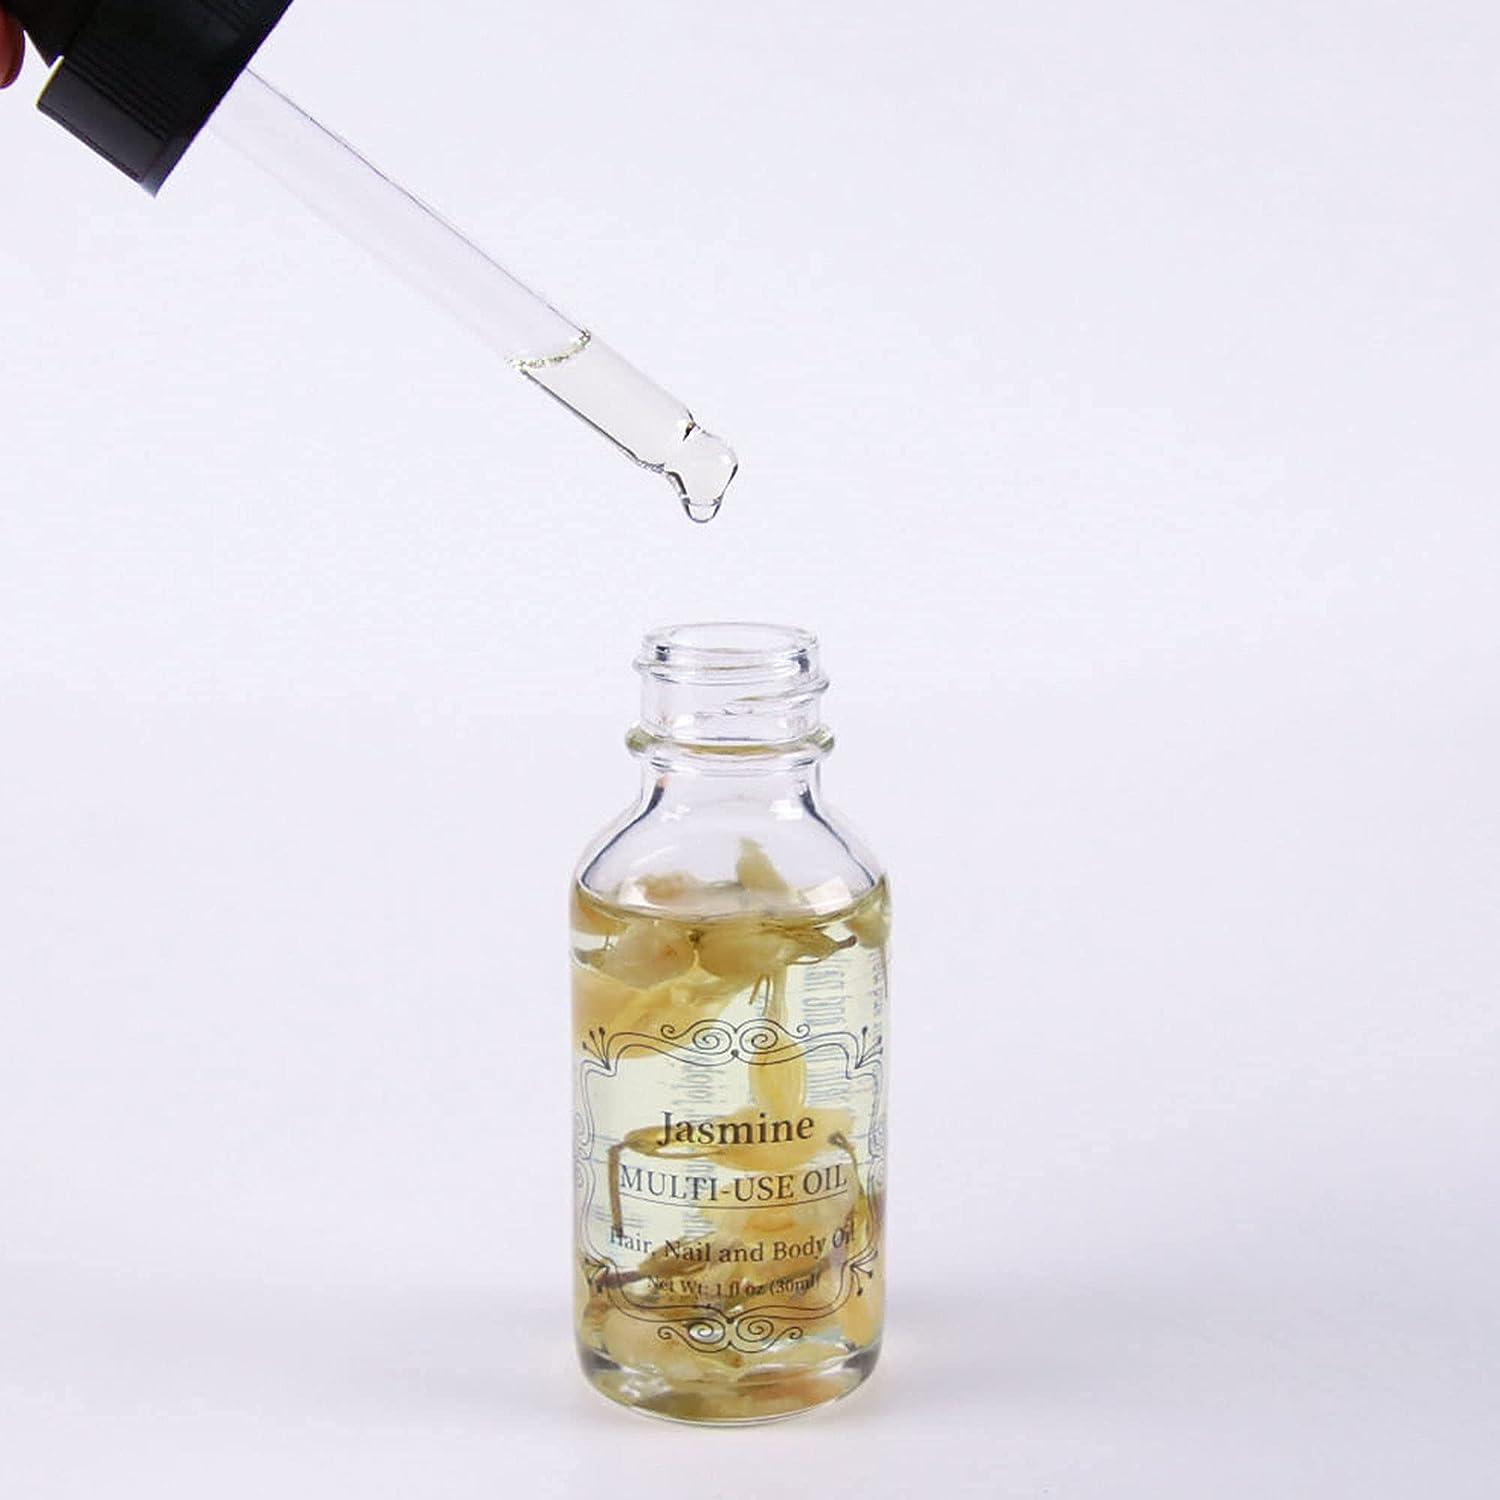 Pure Gold Essential Oils - Vanilla Essential Oil - 0.33 Fluid Ounces Vanilla  0.33 Fl Oz (Pack of